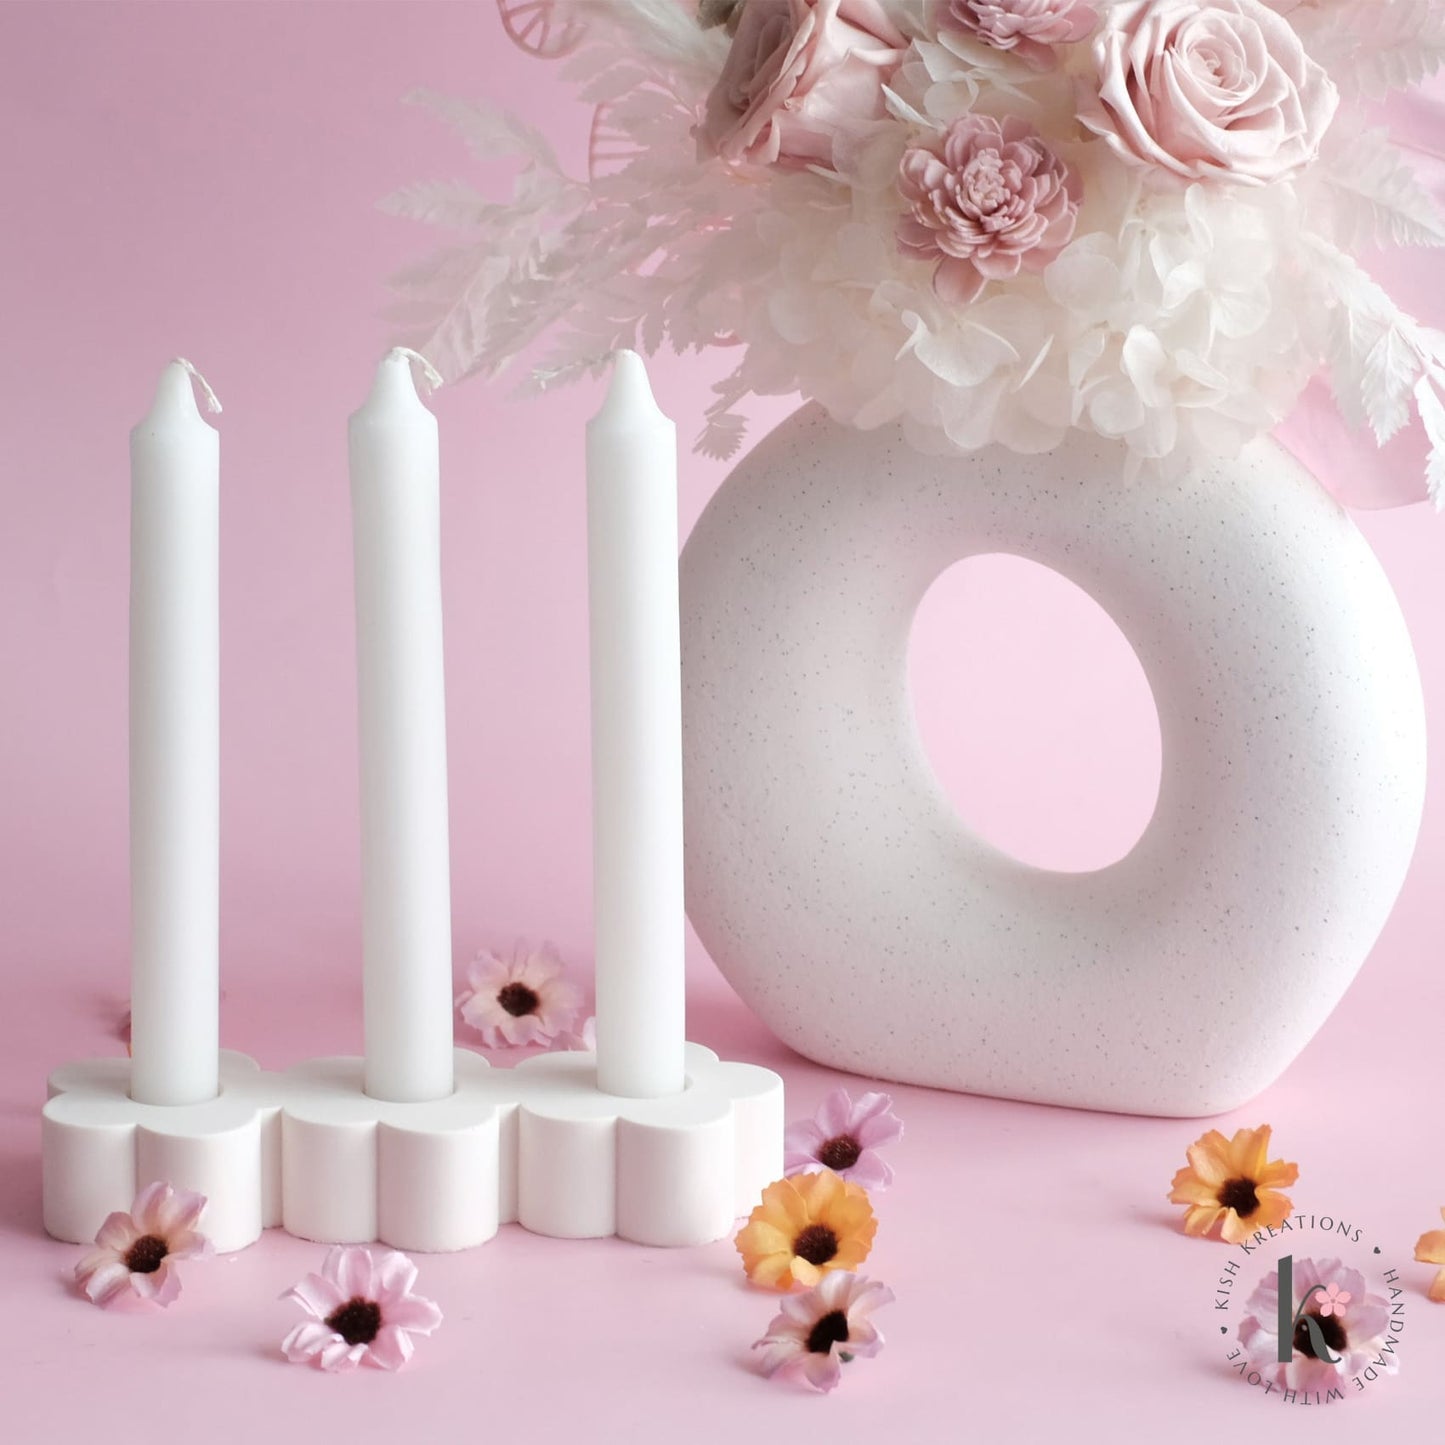 Triple Blossom Candle Holder | Plain Design - Kish Kreations - Candle Holders, Homewares - triple-blossom-candle-holder-plain-design